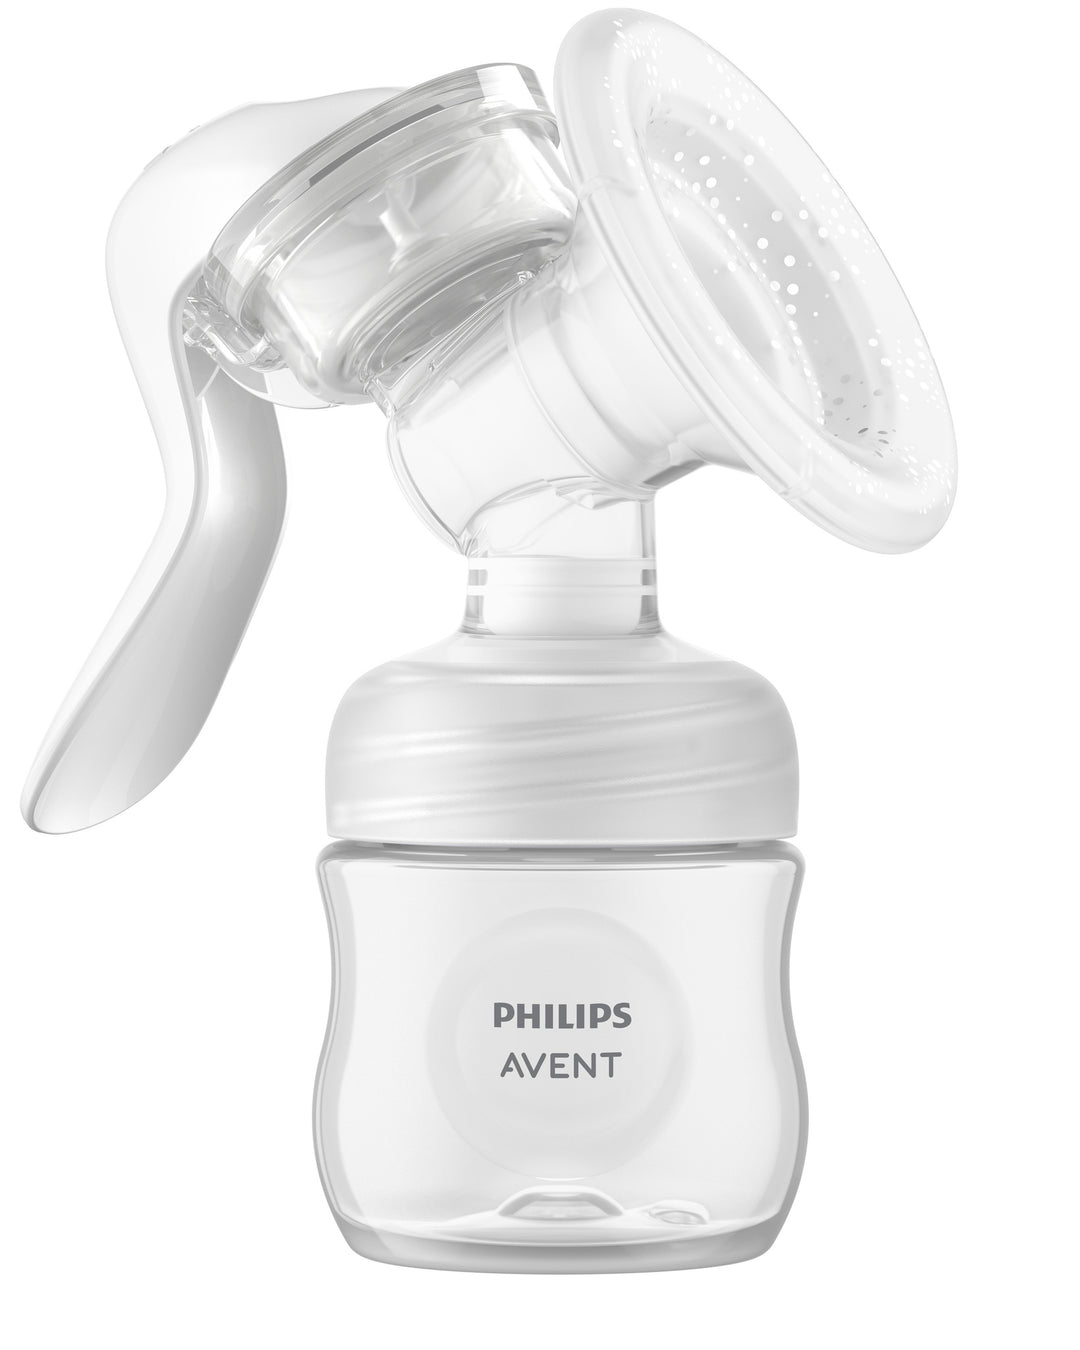 Philips Avent - Manual Breast Pump